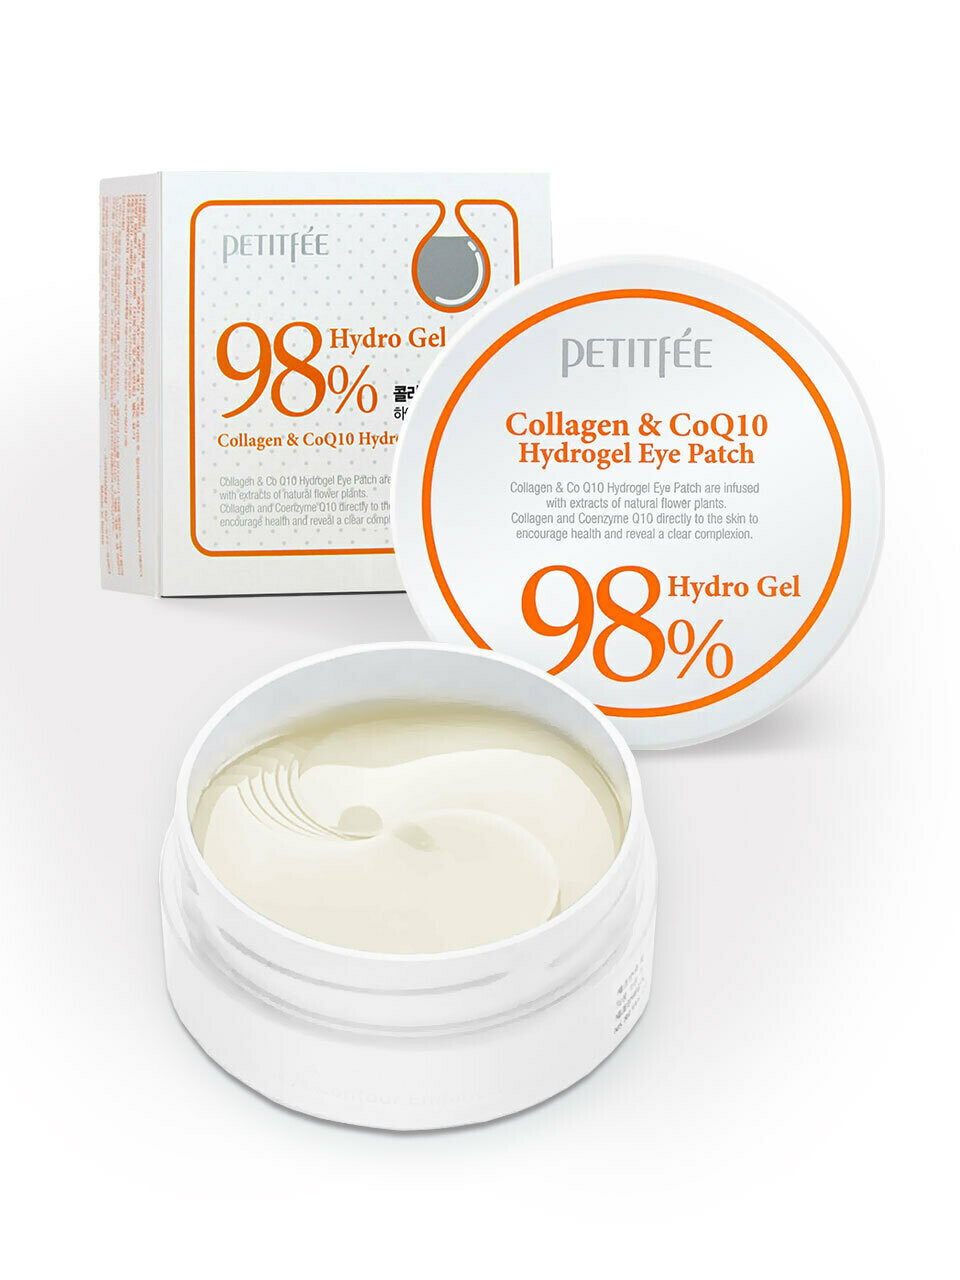 PETITFEE 98% Hydro Gel Collagen & CoQ10 Hydrogel Eye Patch